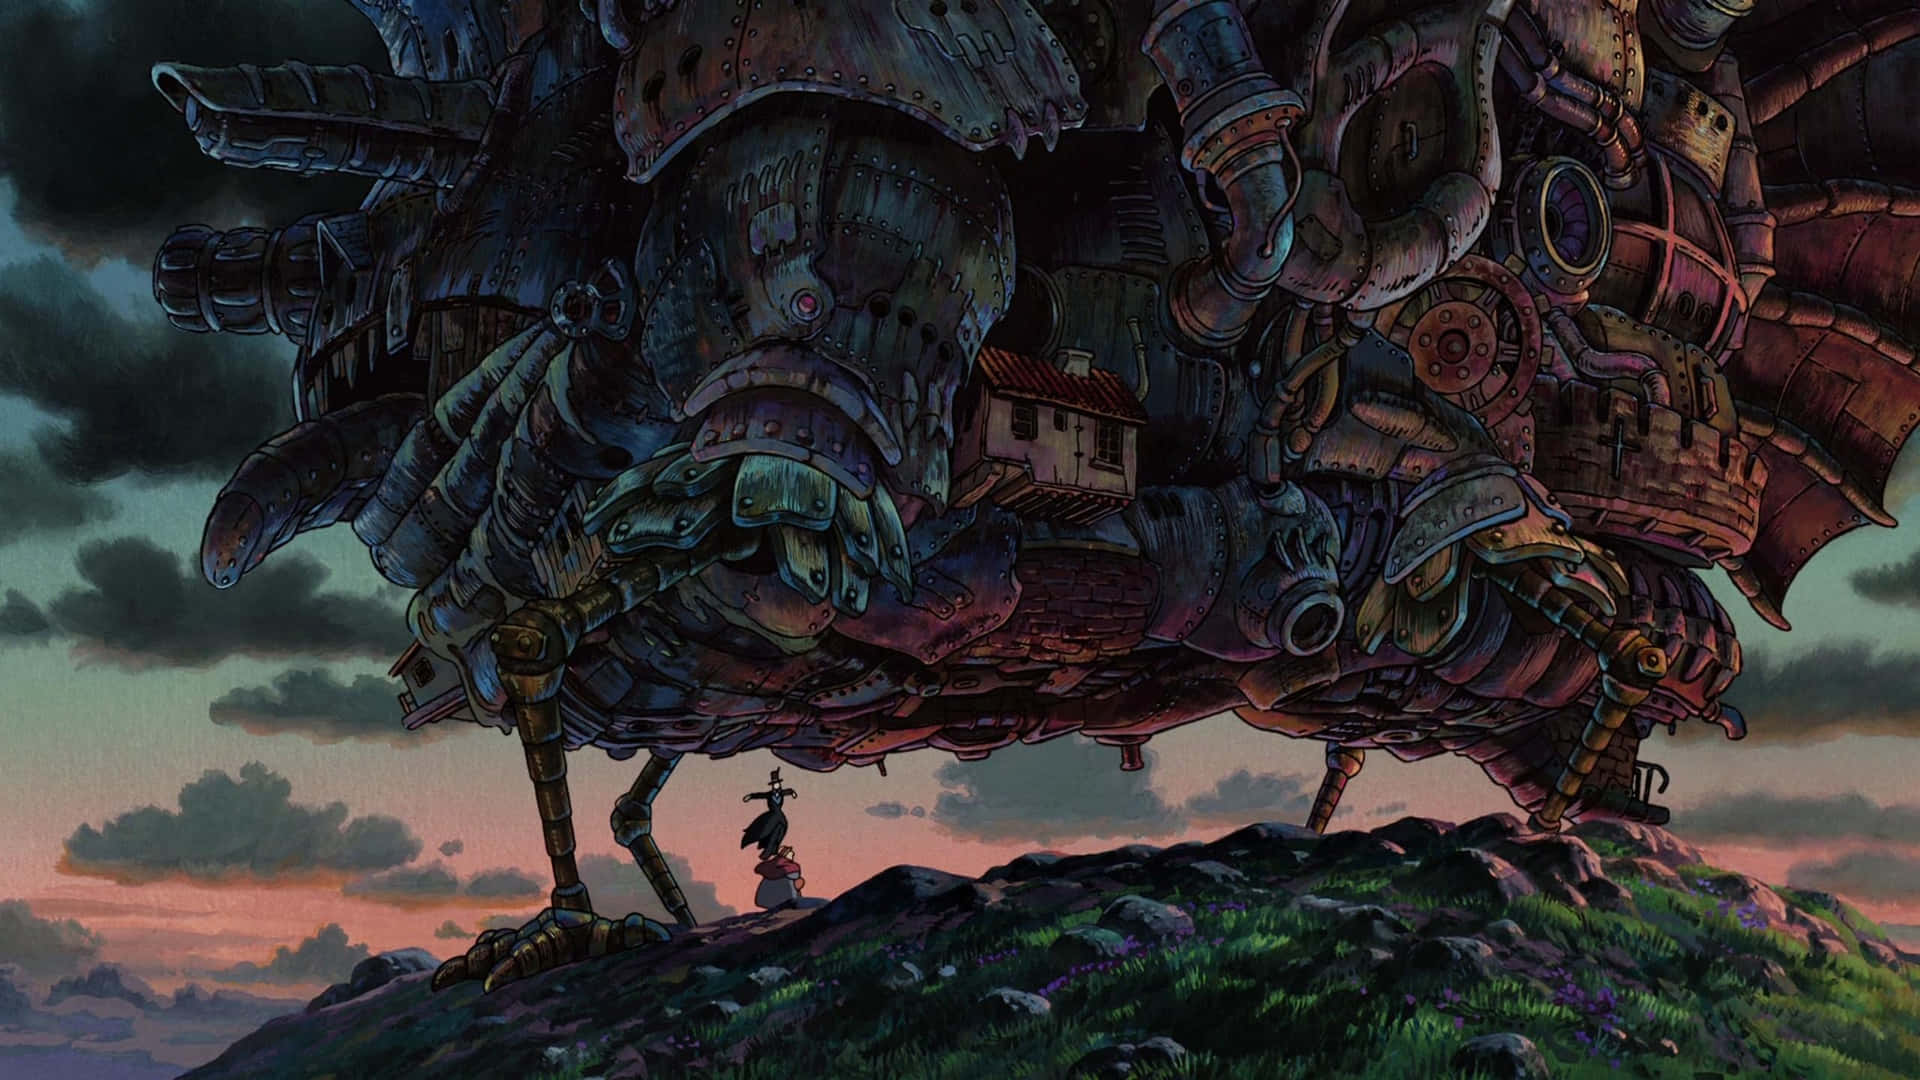 Enchanting Studio Ghibli Art Featuring Totoro and Kiki's Delivery Service Wallpaper